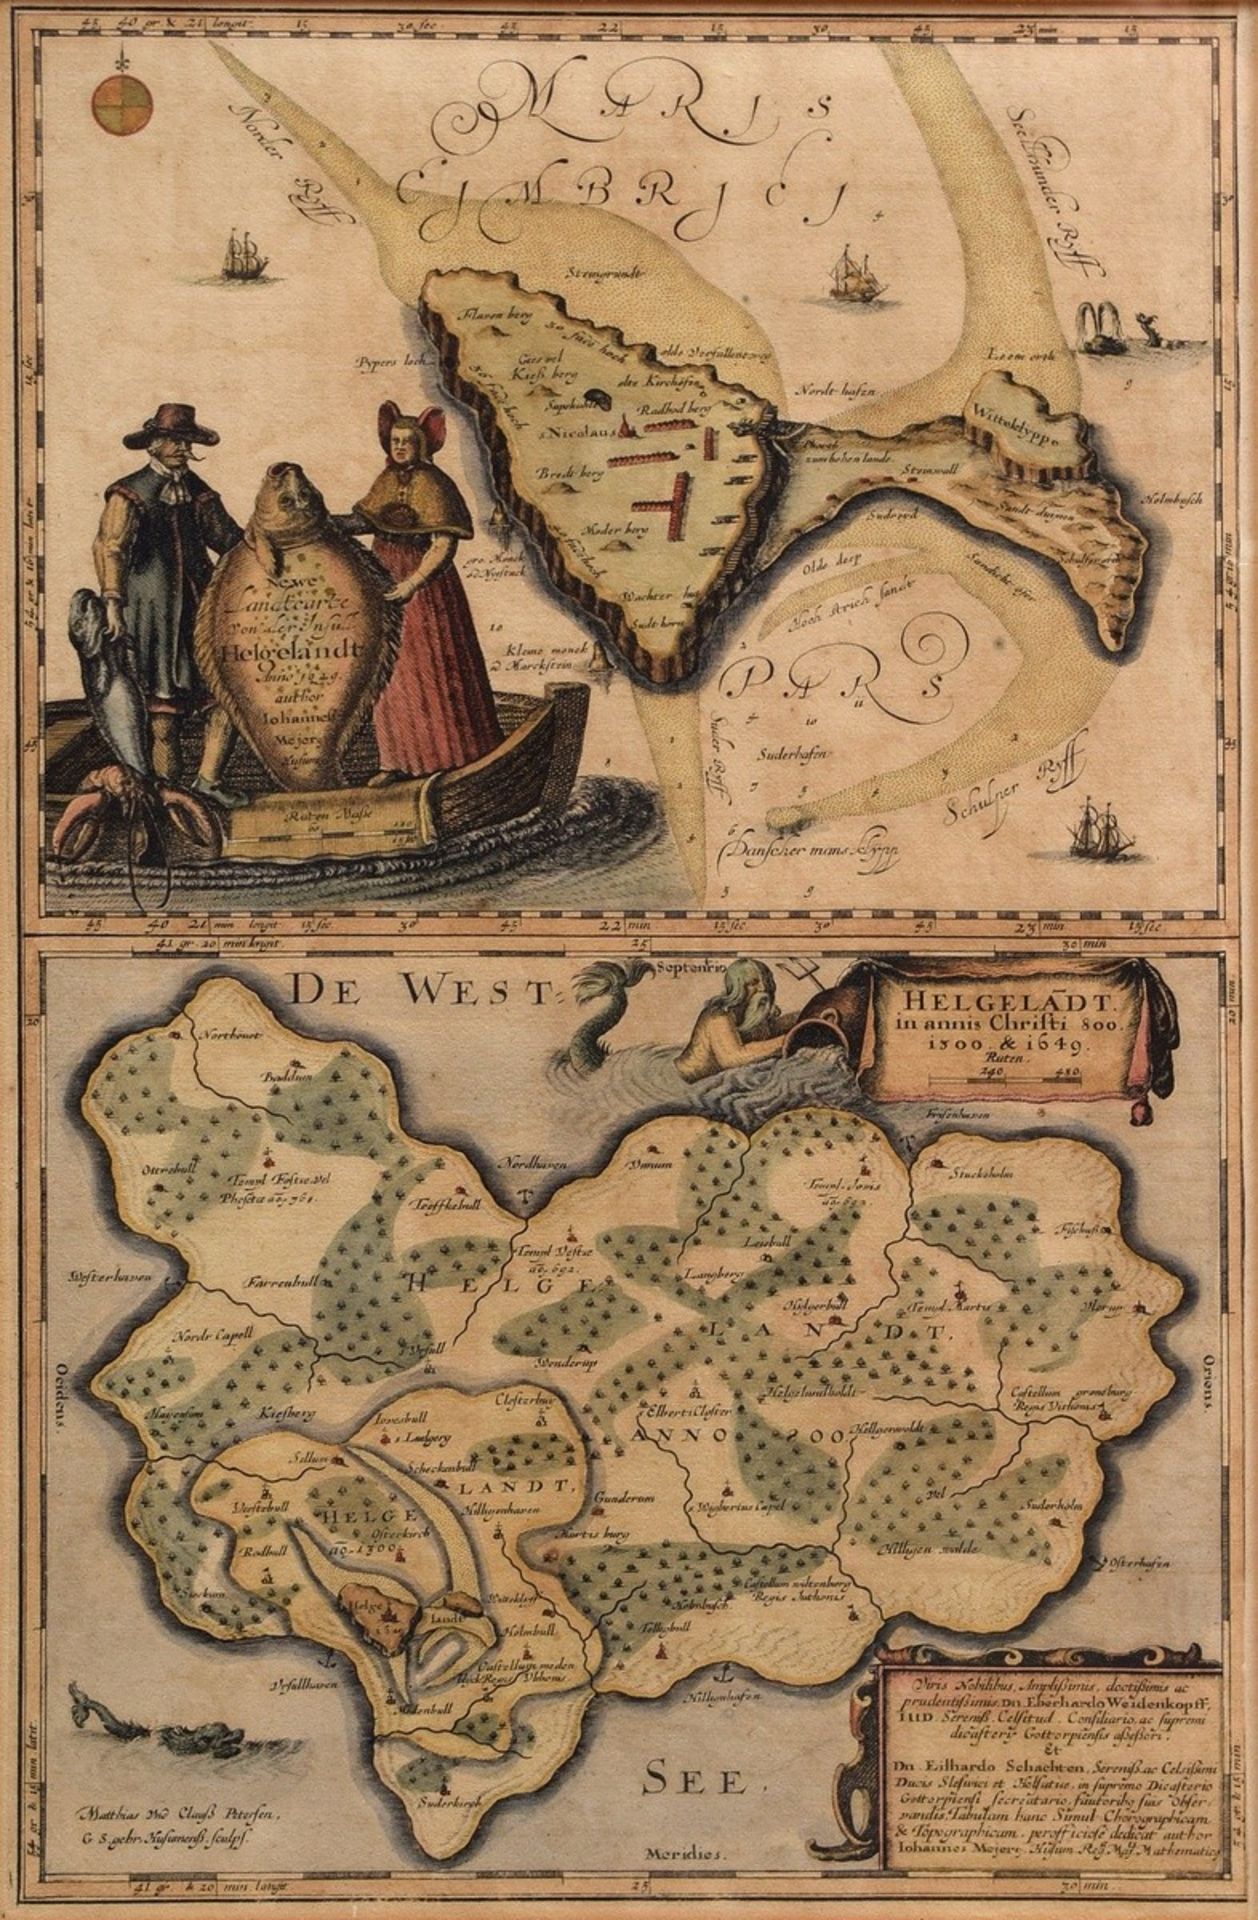 Mejer, Johannes (1606-1674) "Newe Landcarte von der Insul Helgelandt Anno 1649" and "Helgeladt in a